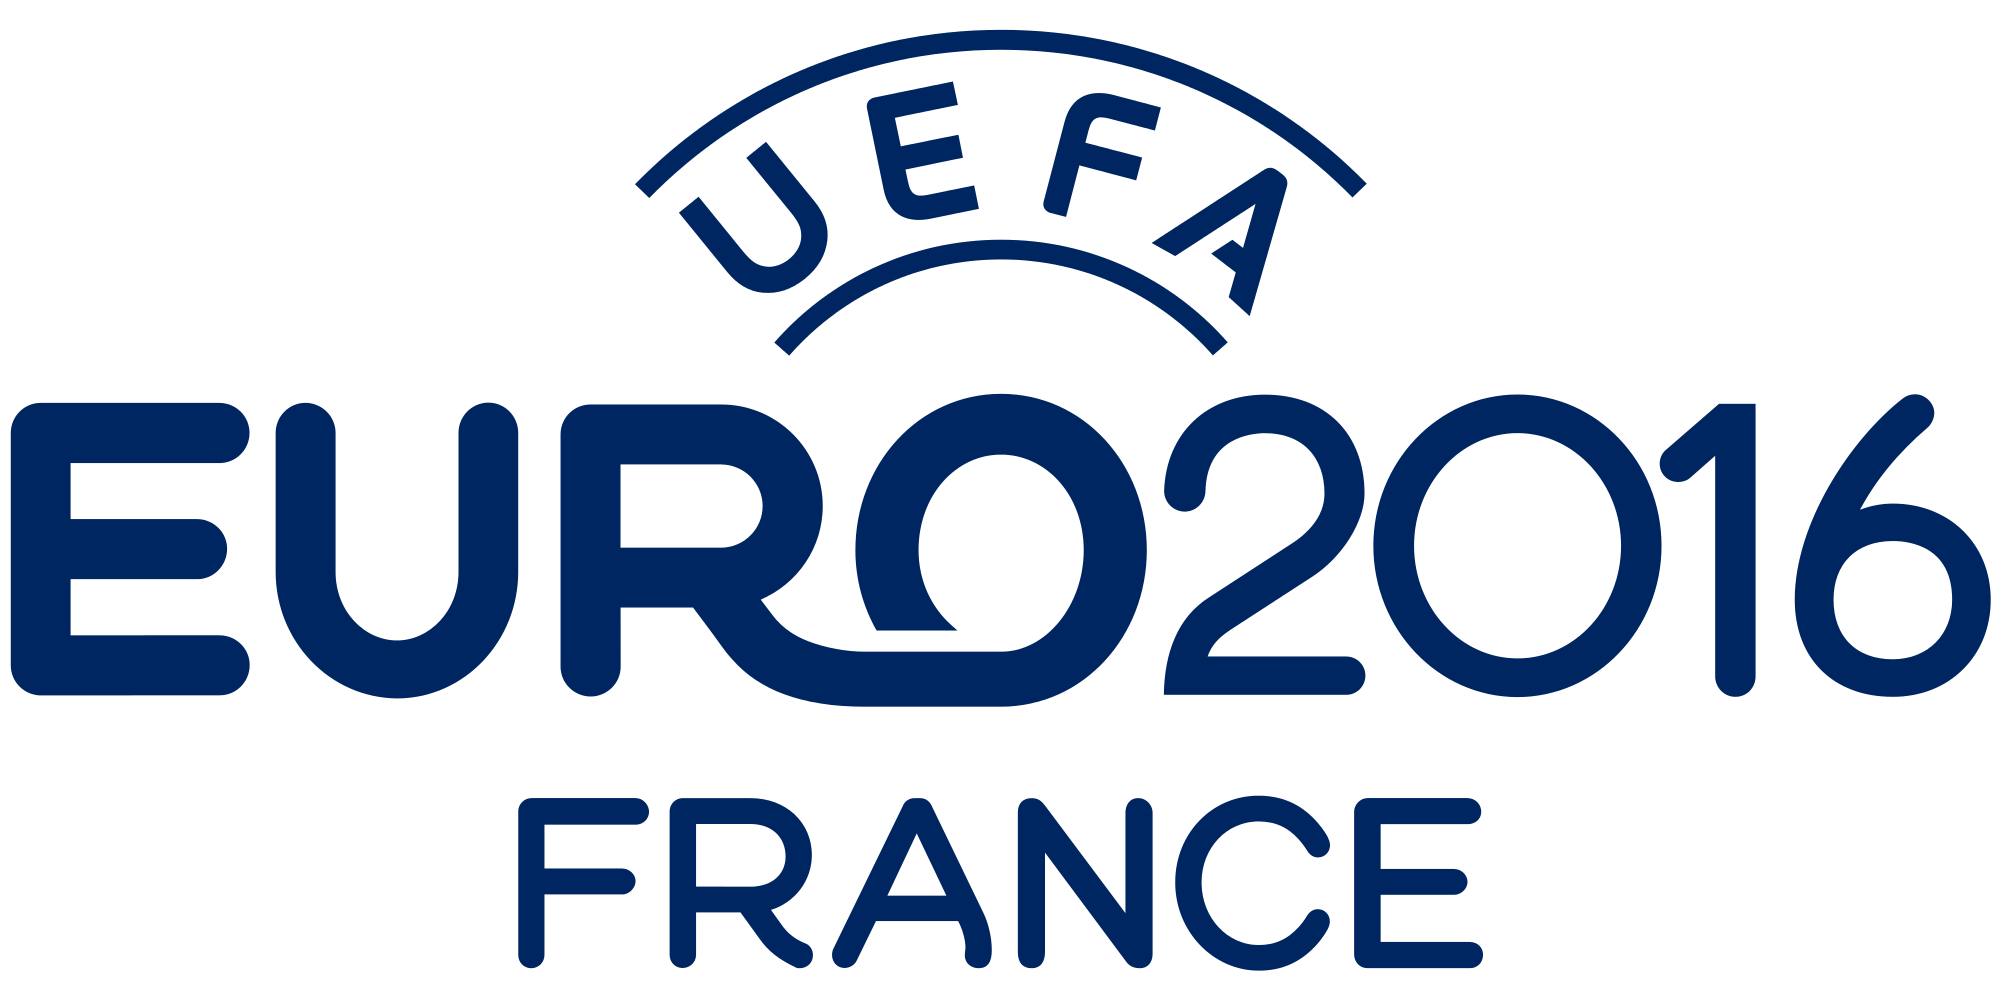 UEFA Euro 2016 Pics, Sports Collection